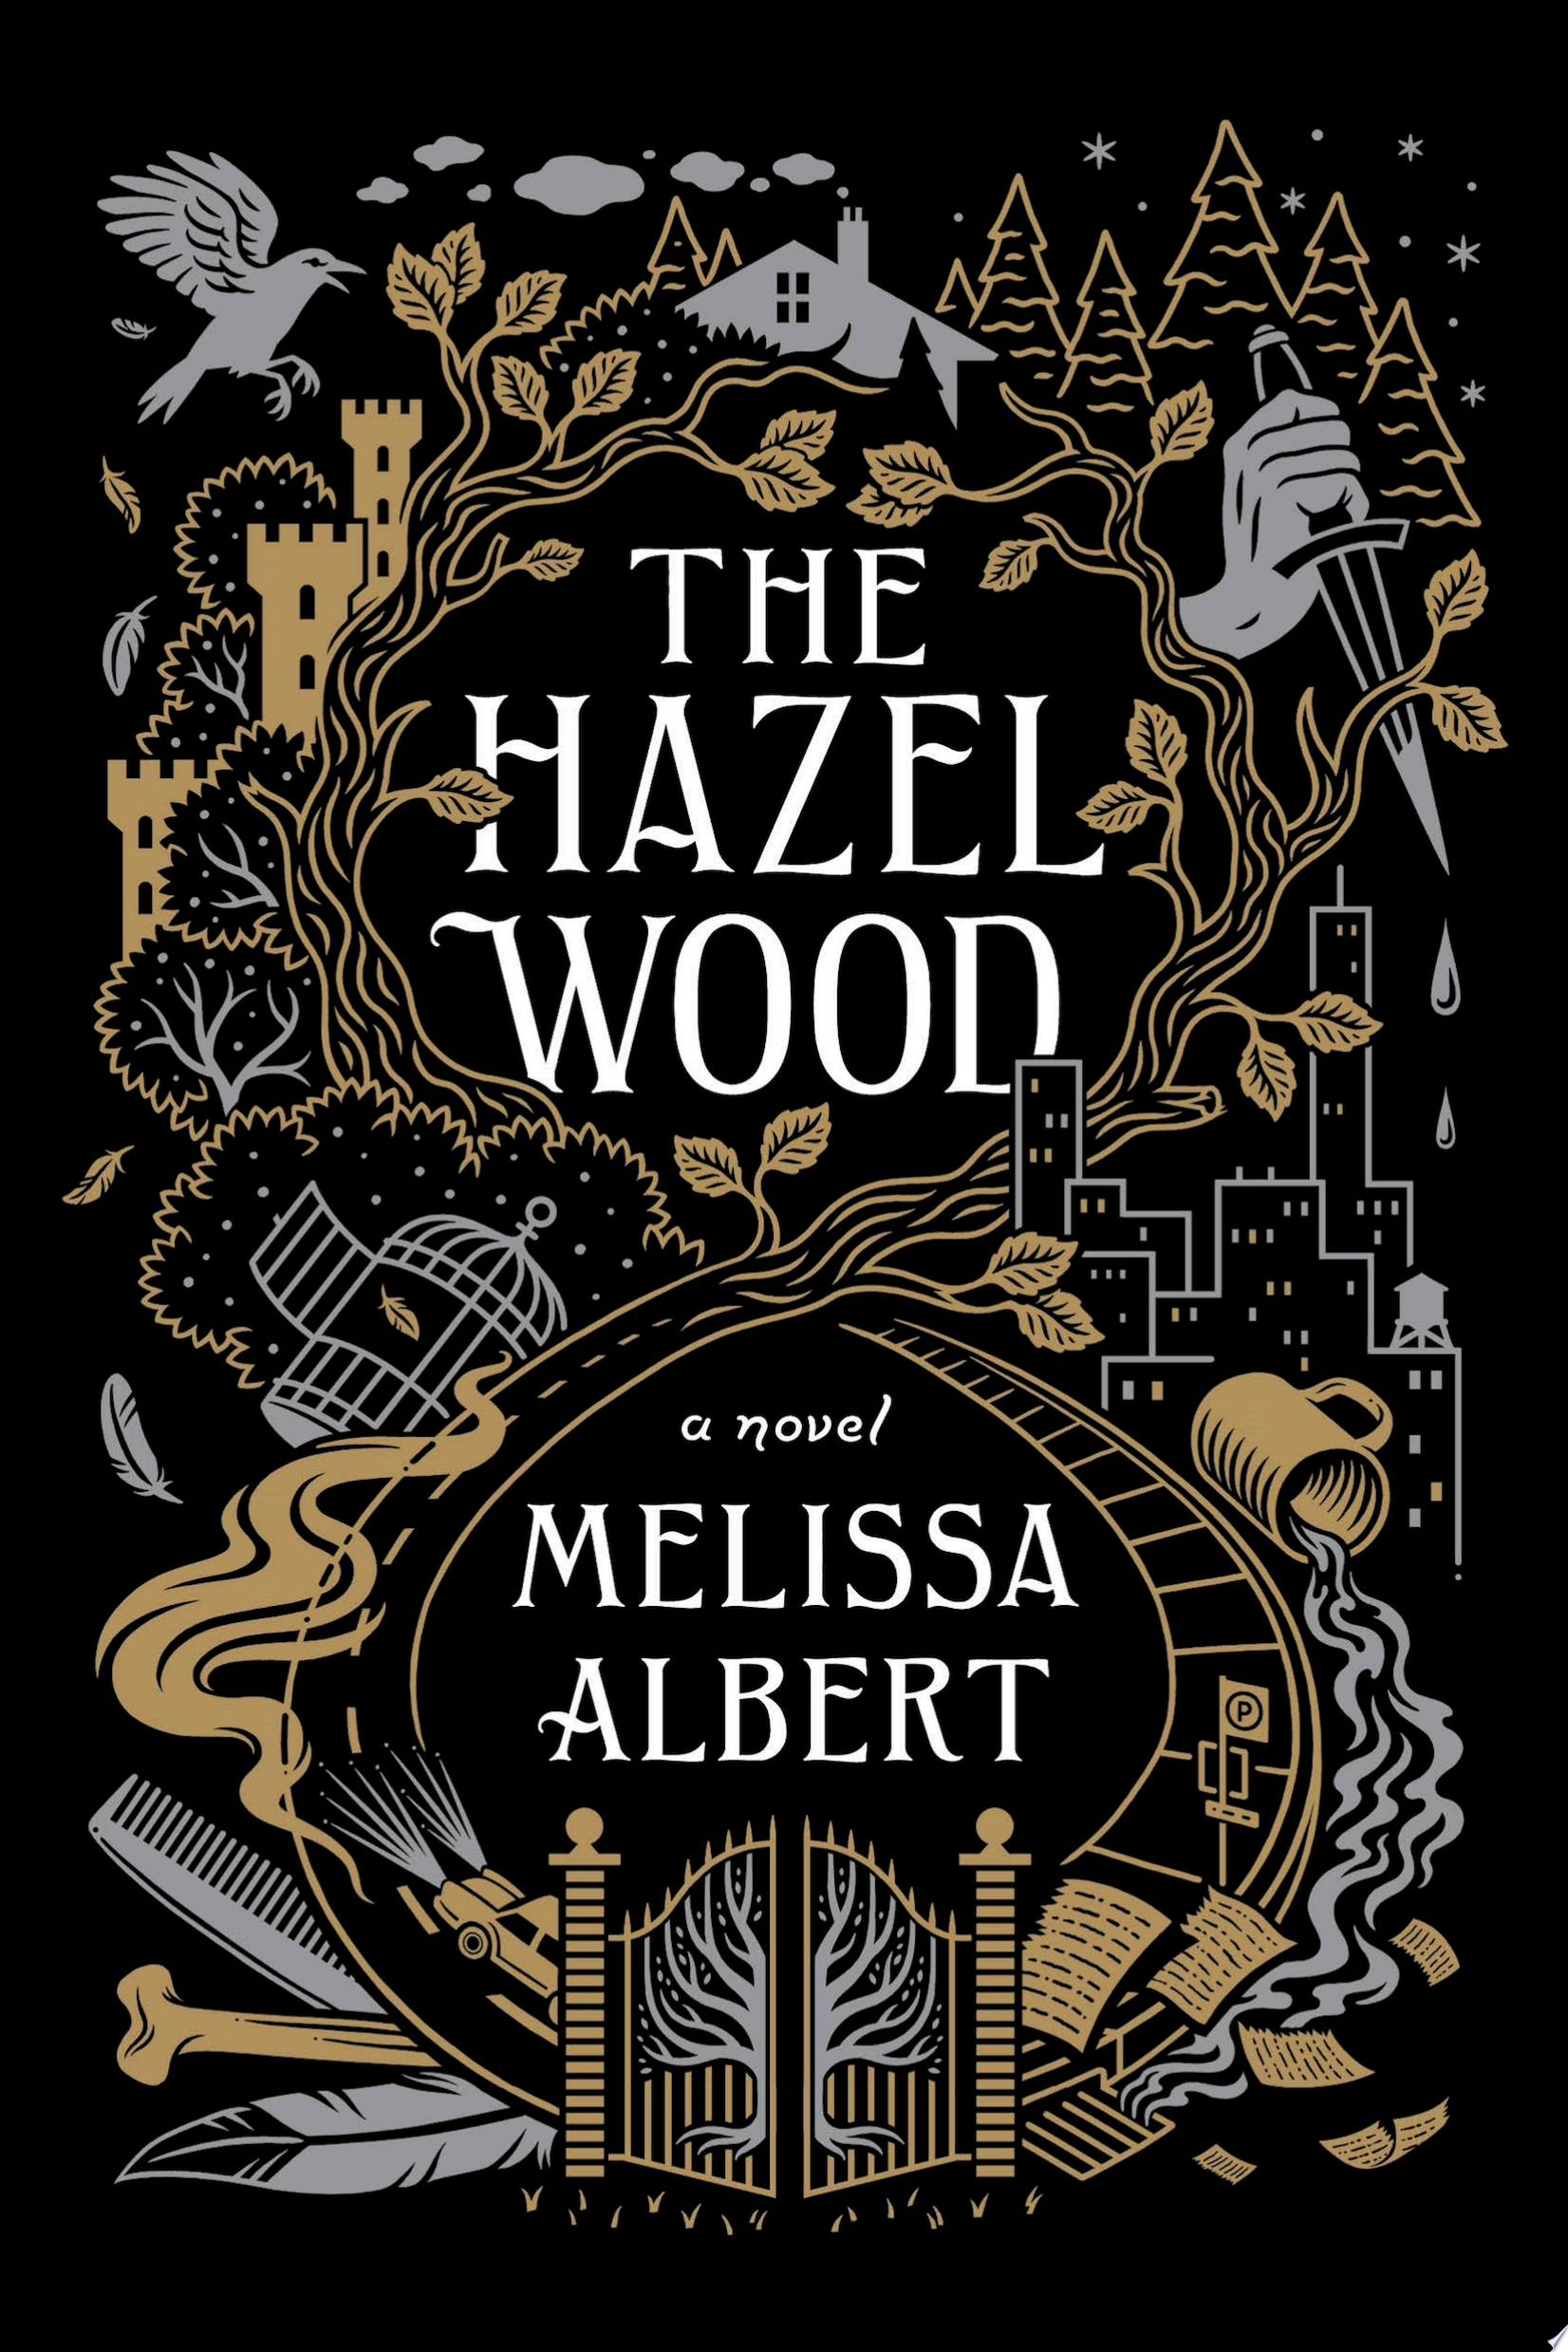 Image for "The Hazel Wood"